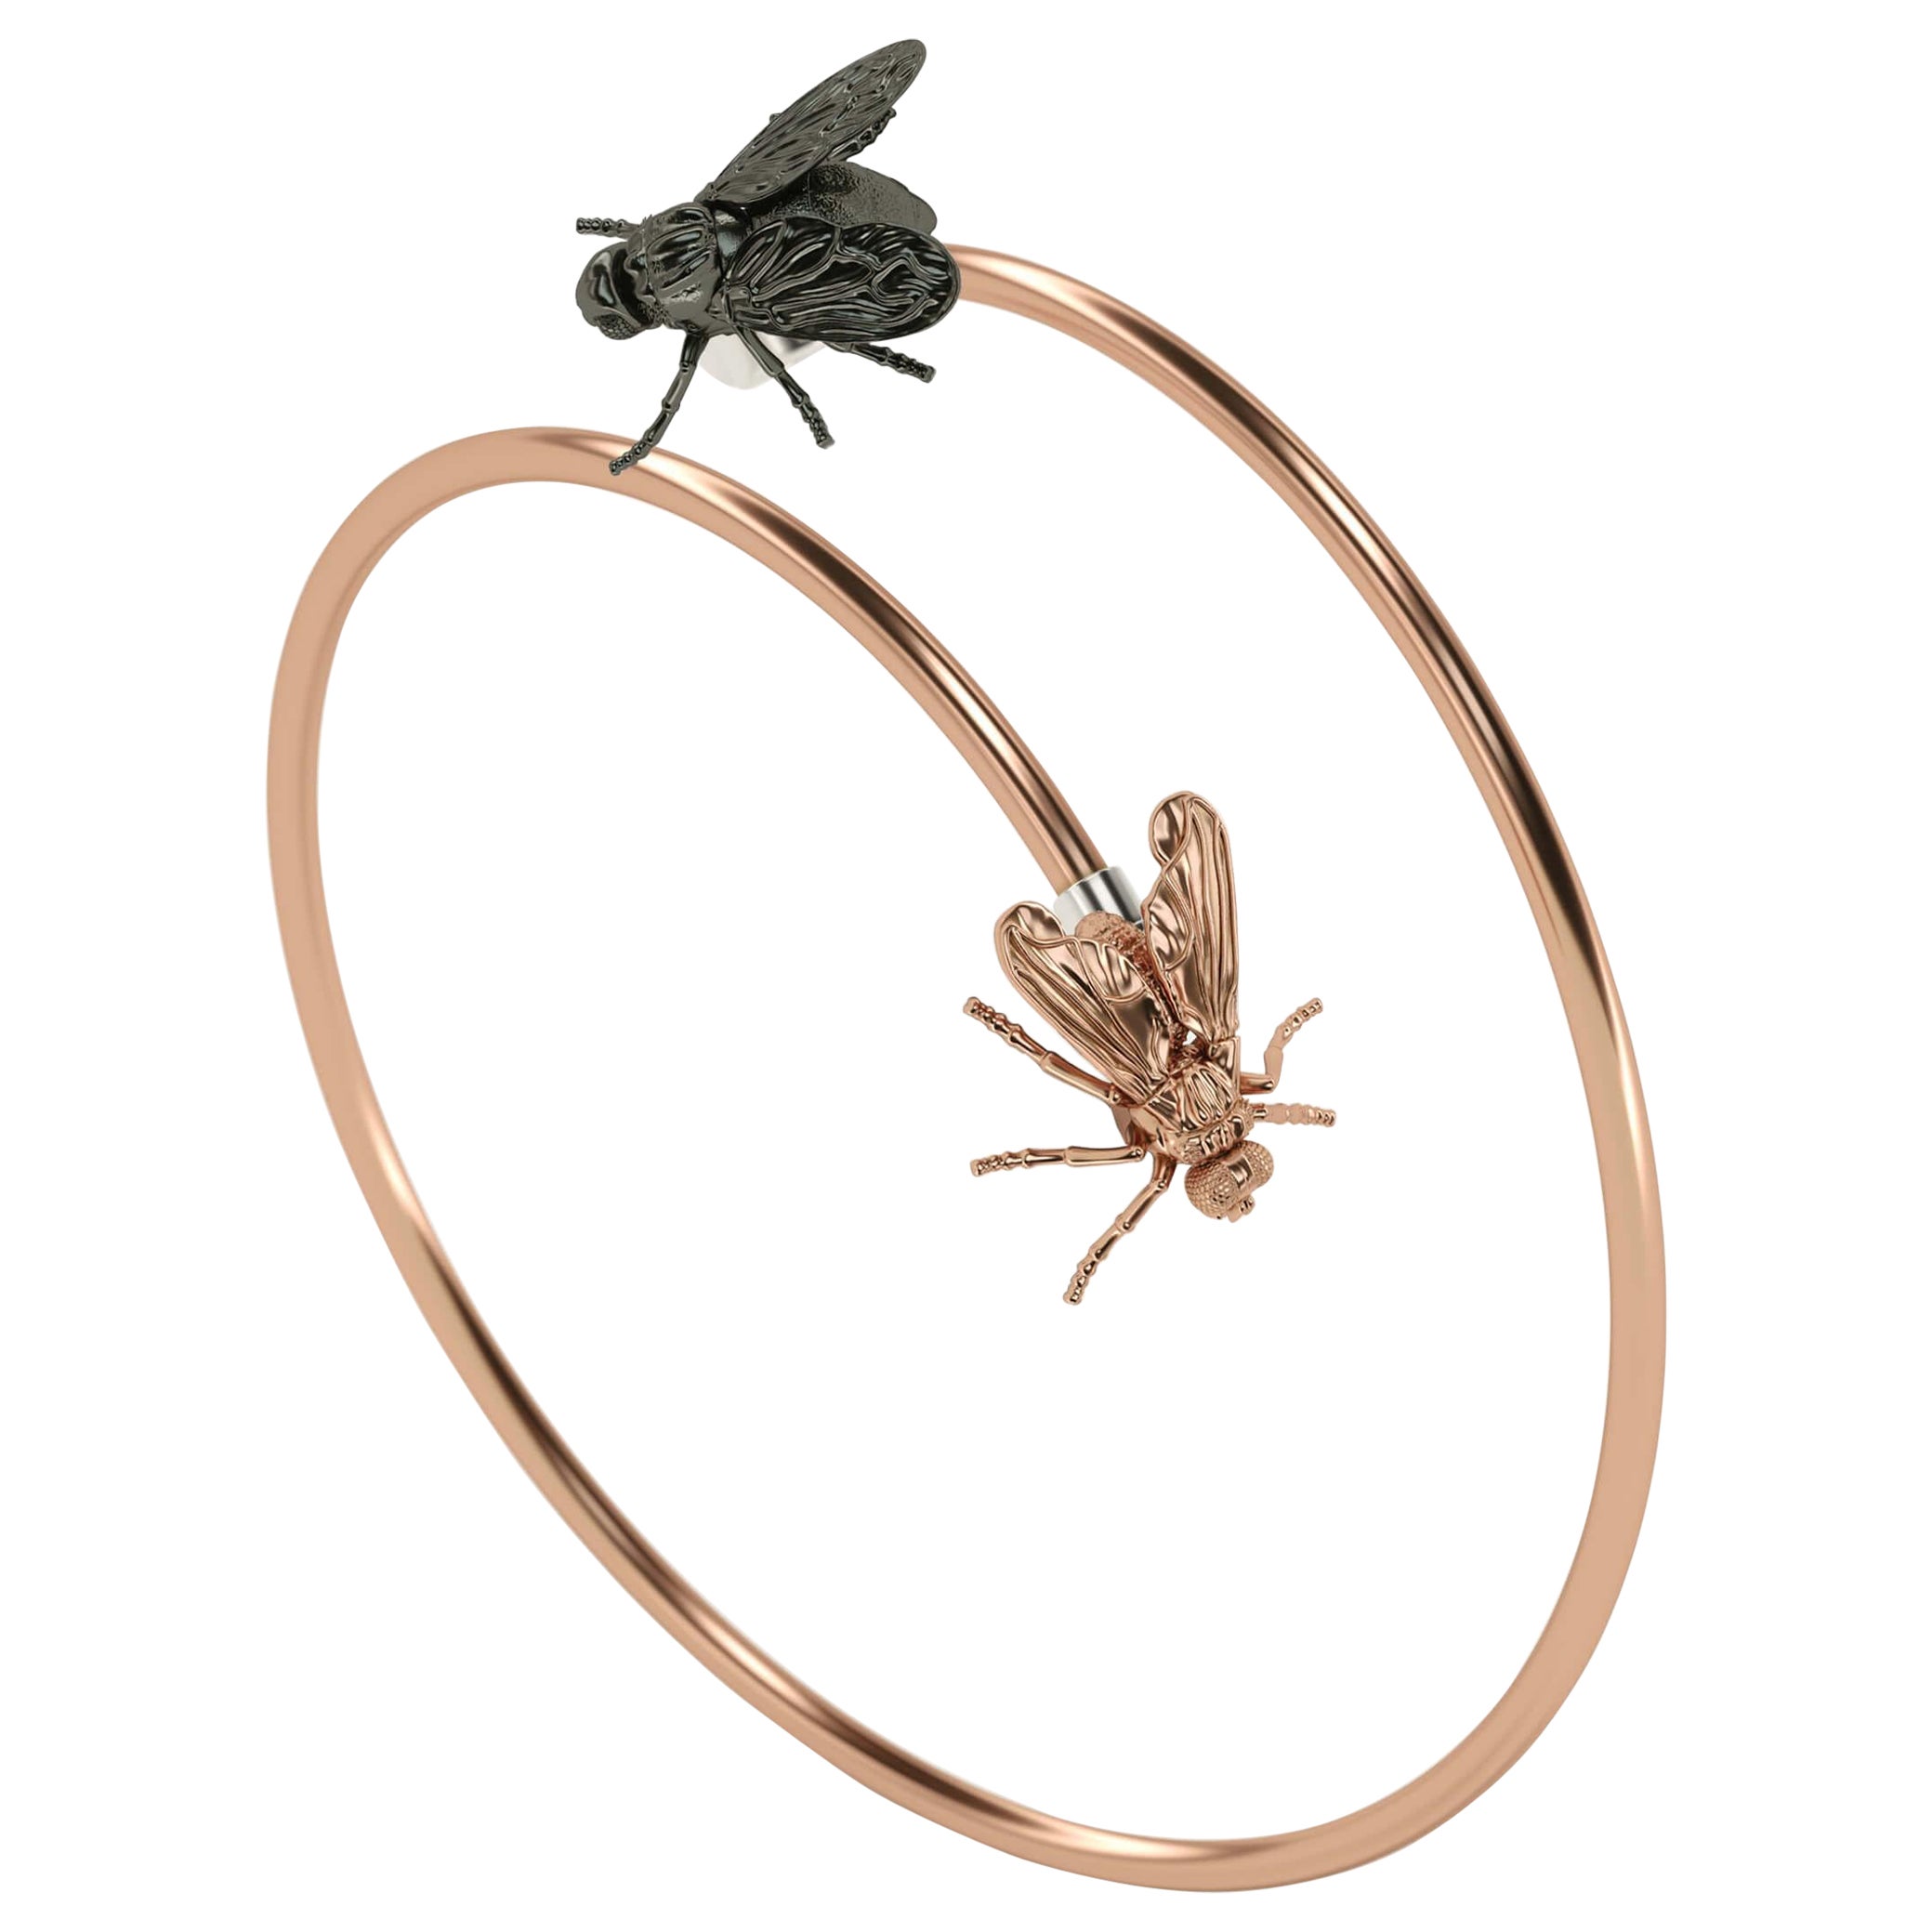 Animalia Mode Gold Armband mit zwei Fliegen dekorative abnehmbare Pieces